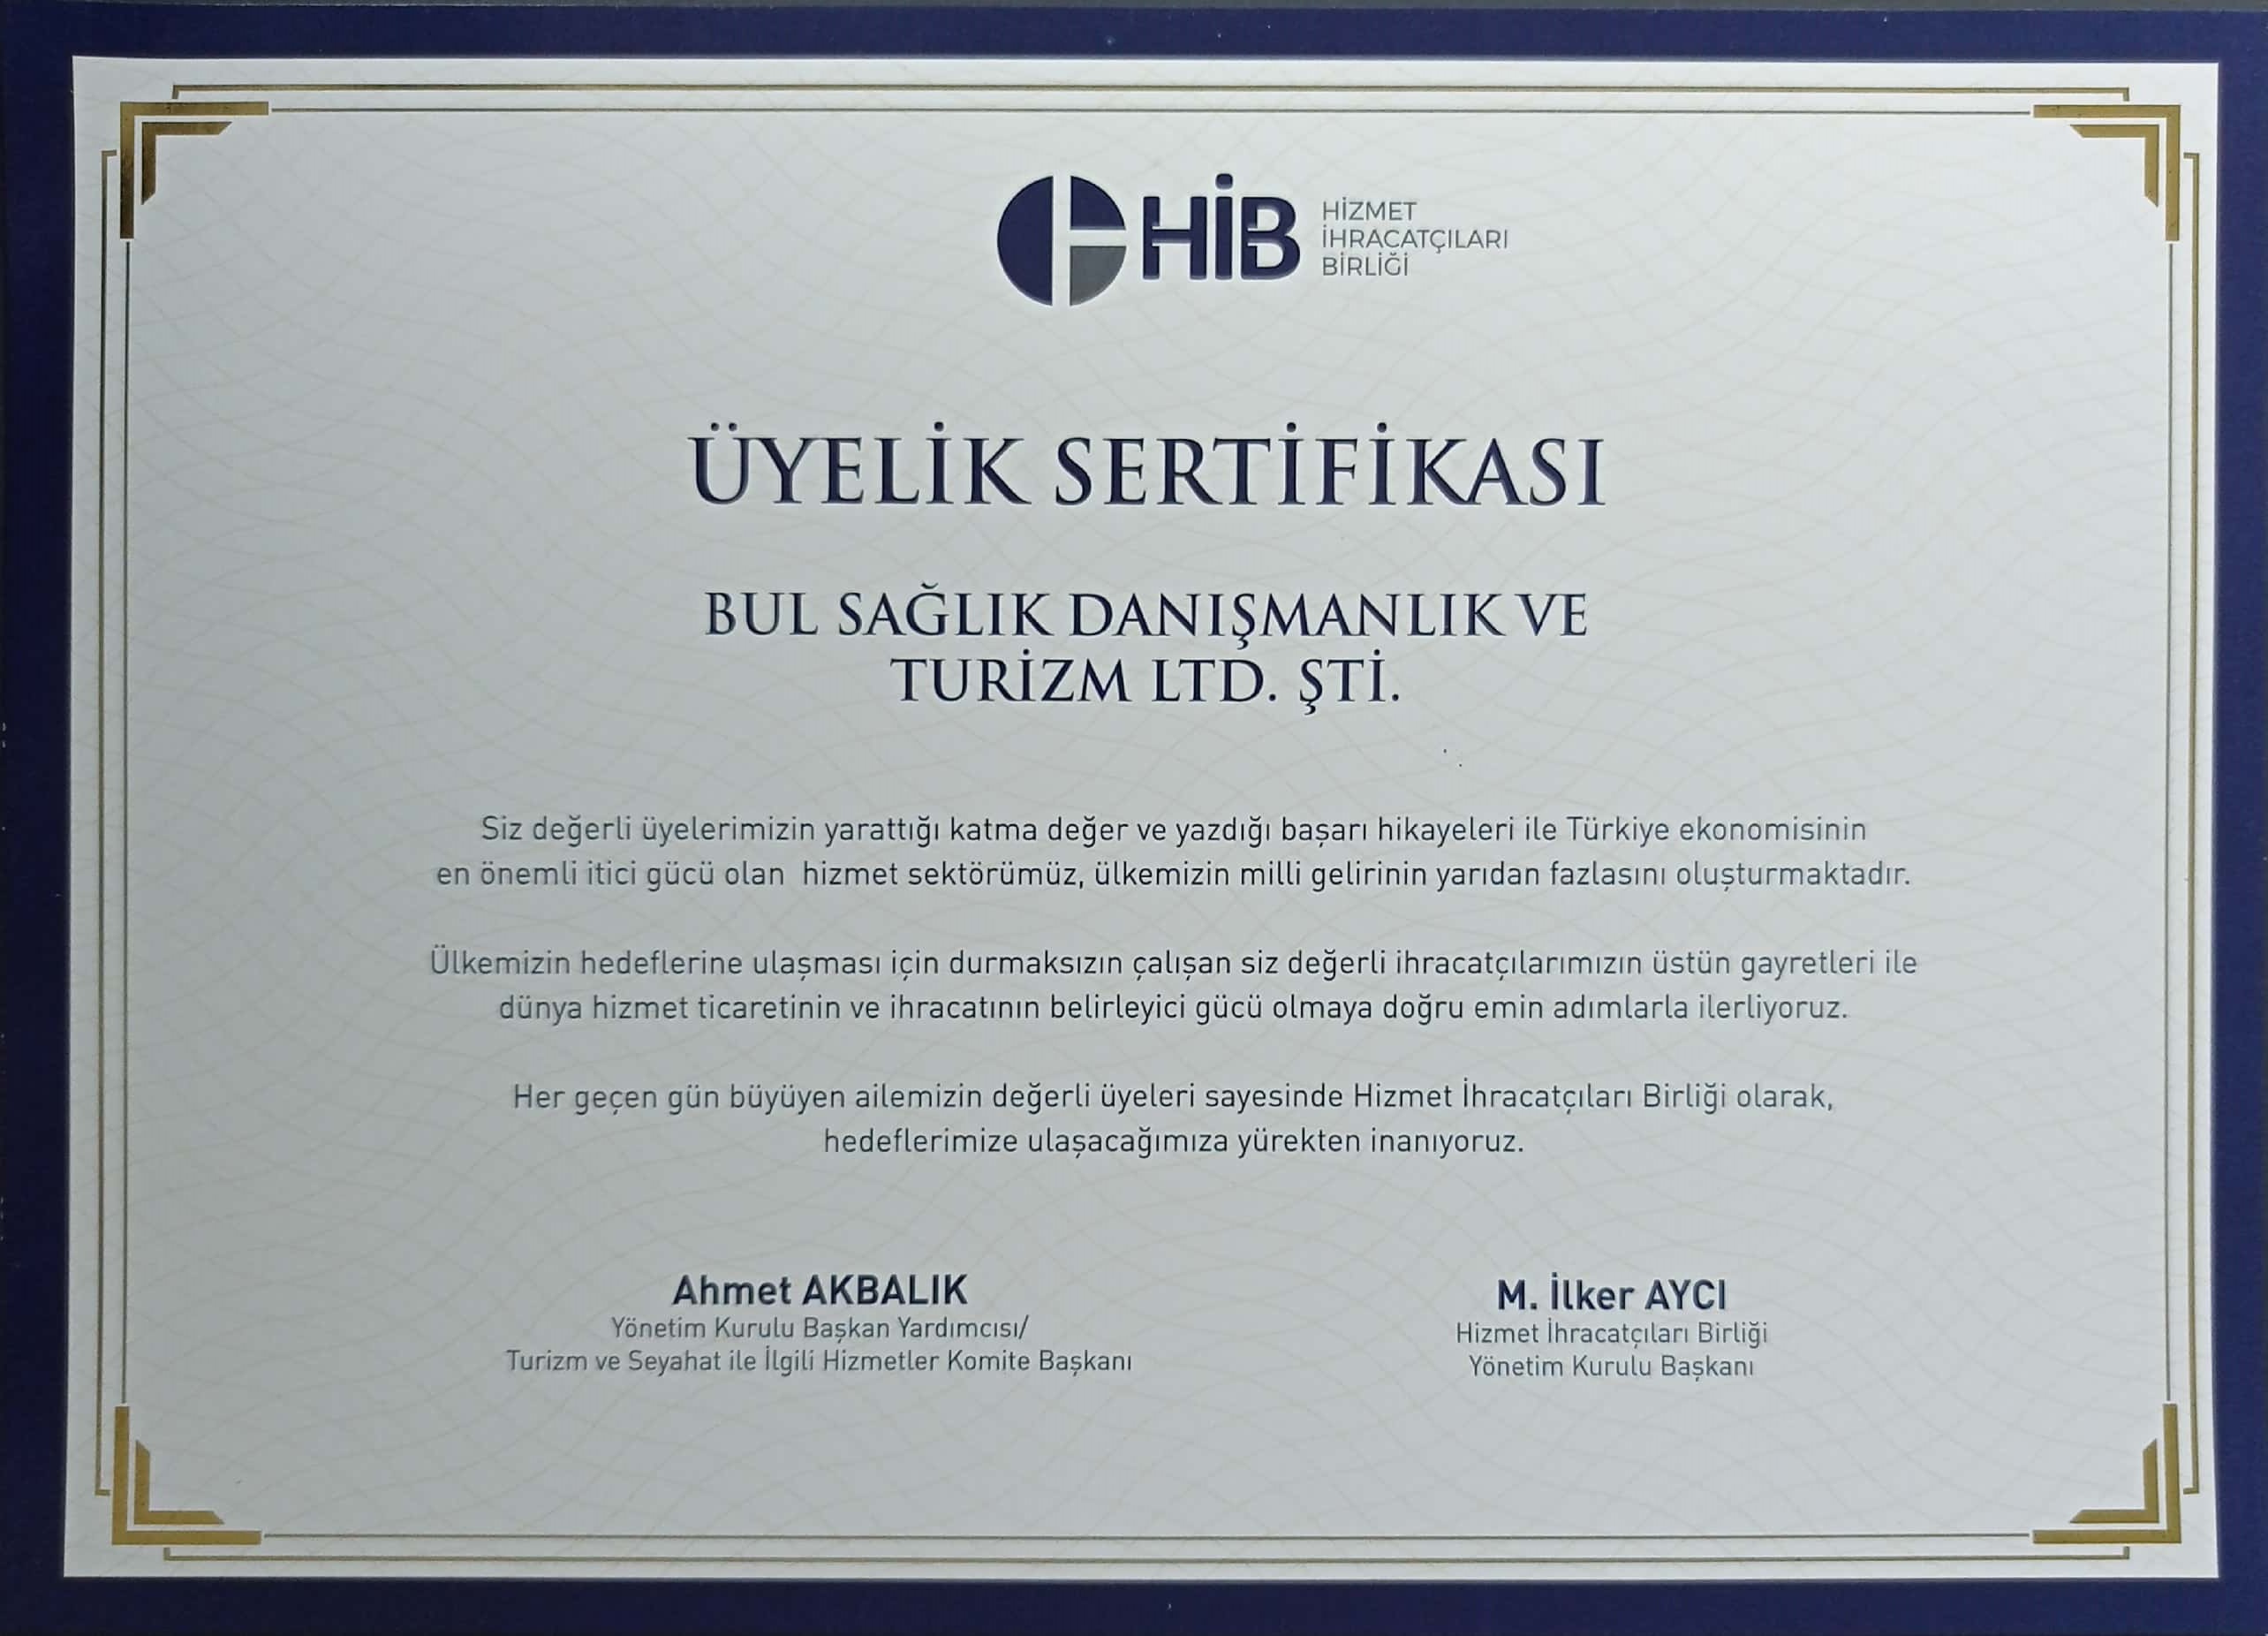 HIB Membership Wannabetaller